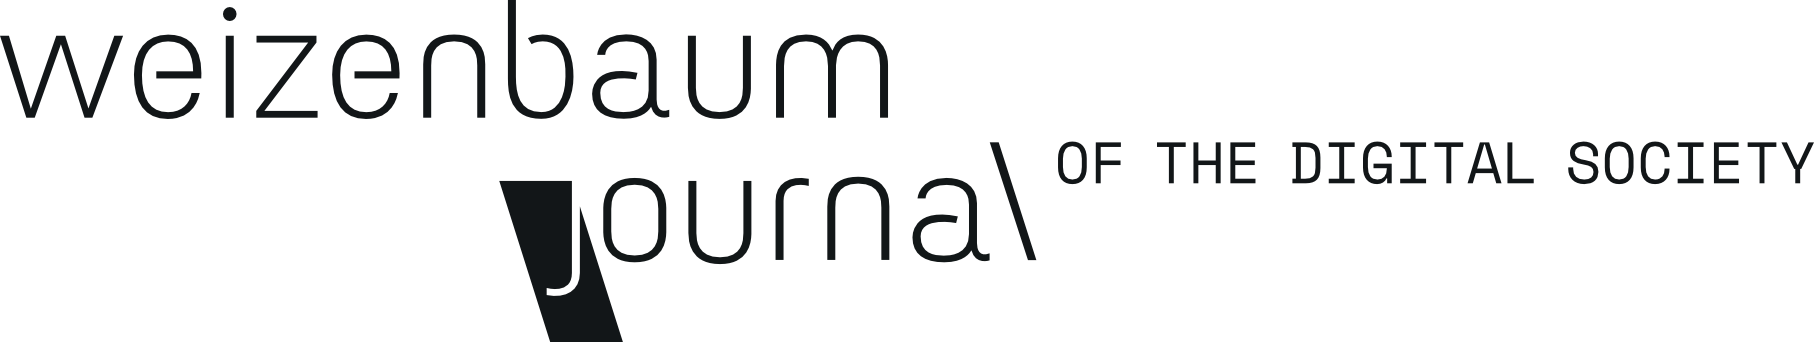 Logo of the Weizenbaum Journal of the Digital Society